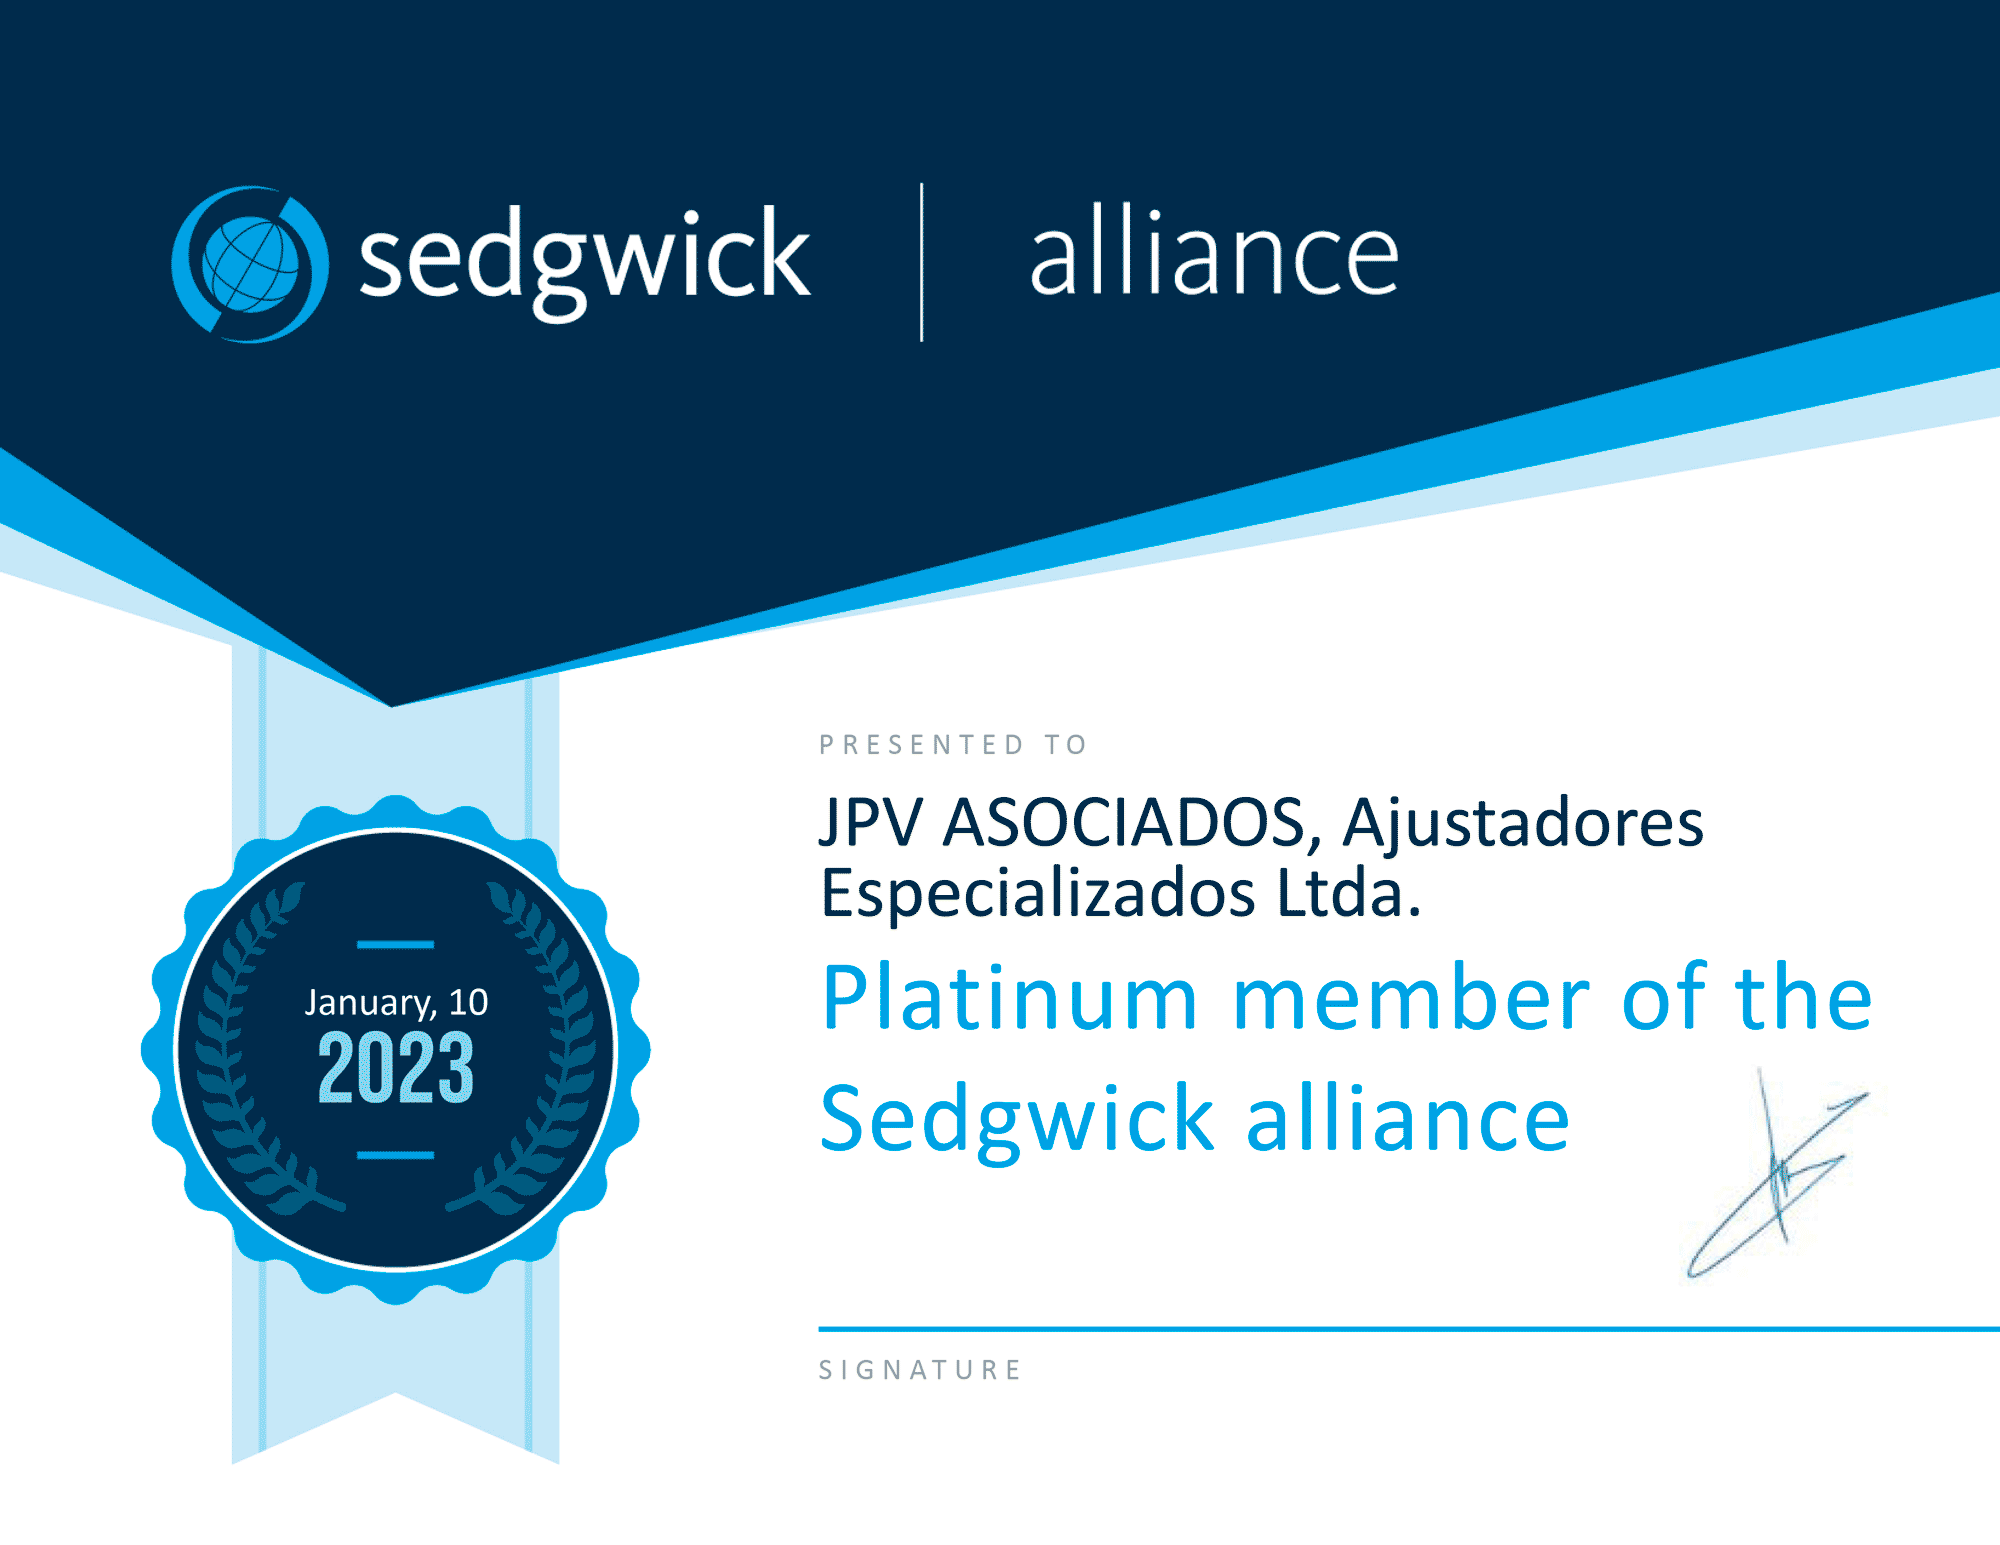 Segwick Alliance<br>Member